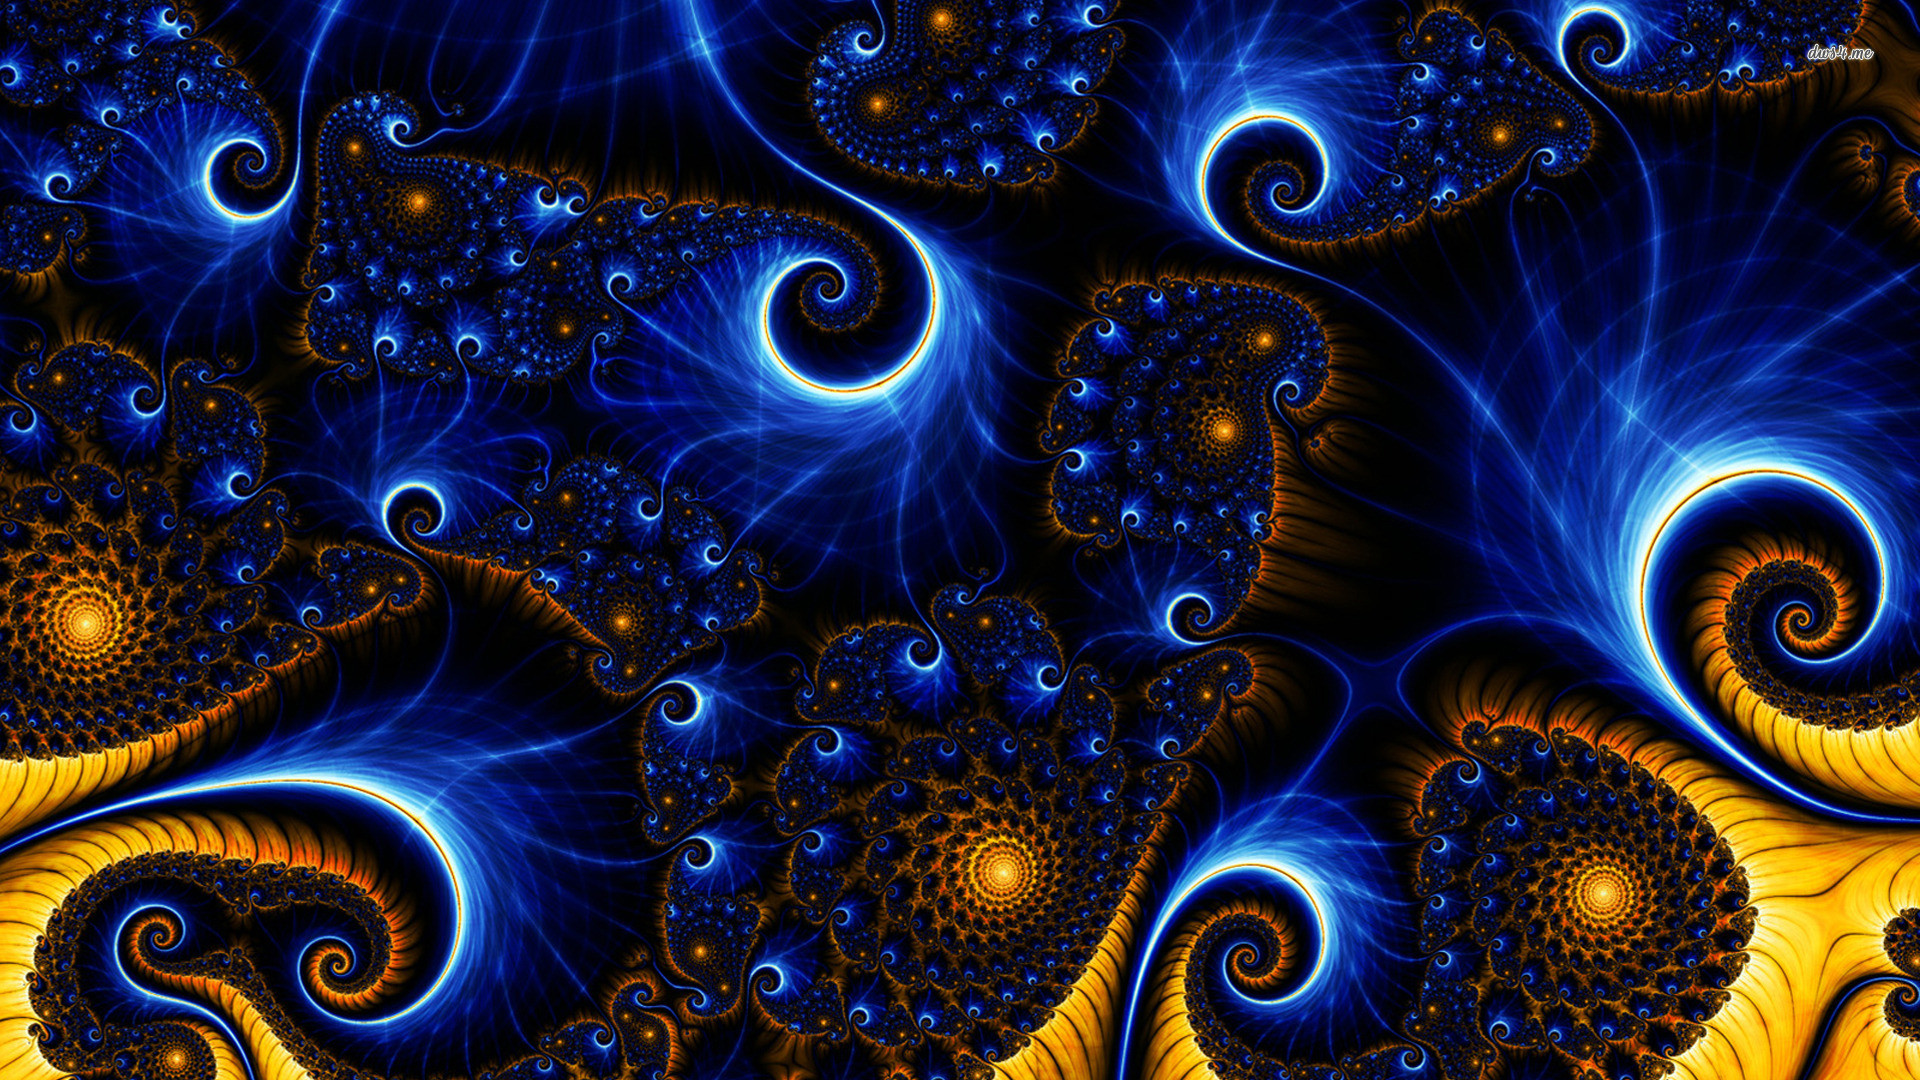  Digital fractal wallpaper   Wallery